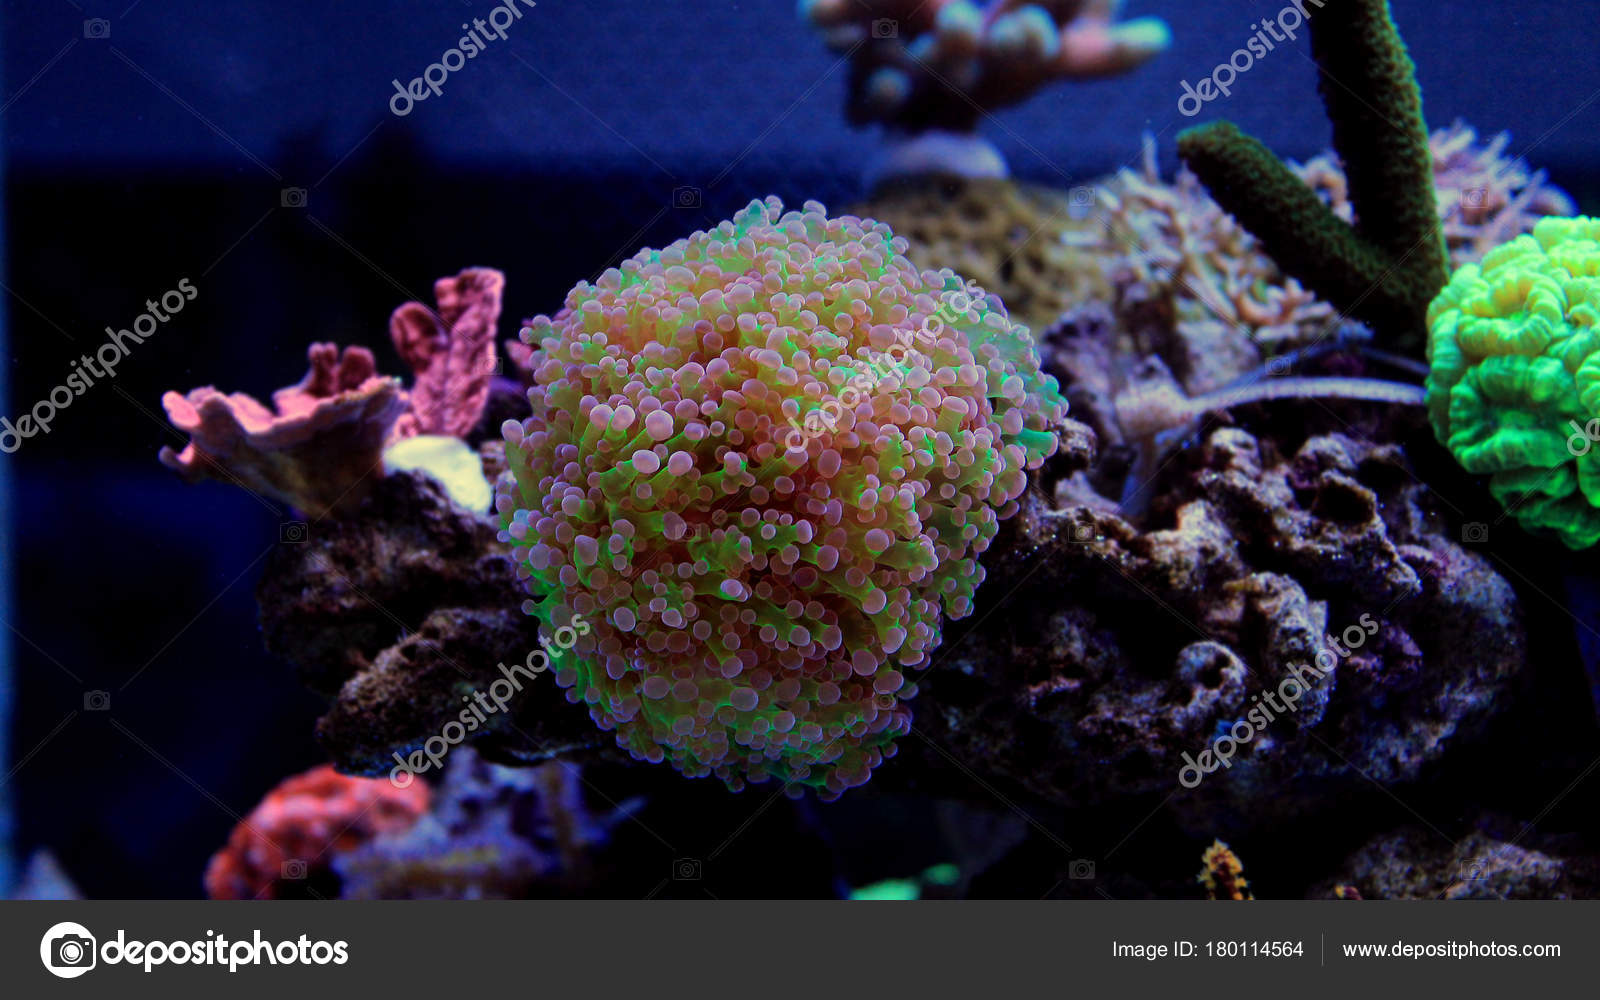 Saltwater Fish Tank In Wall Euphyllia Colorfull Lps Coral Saltwater Aquarium Stock Photo C Vojce 180114564,Sausage Gravy Pizza